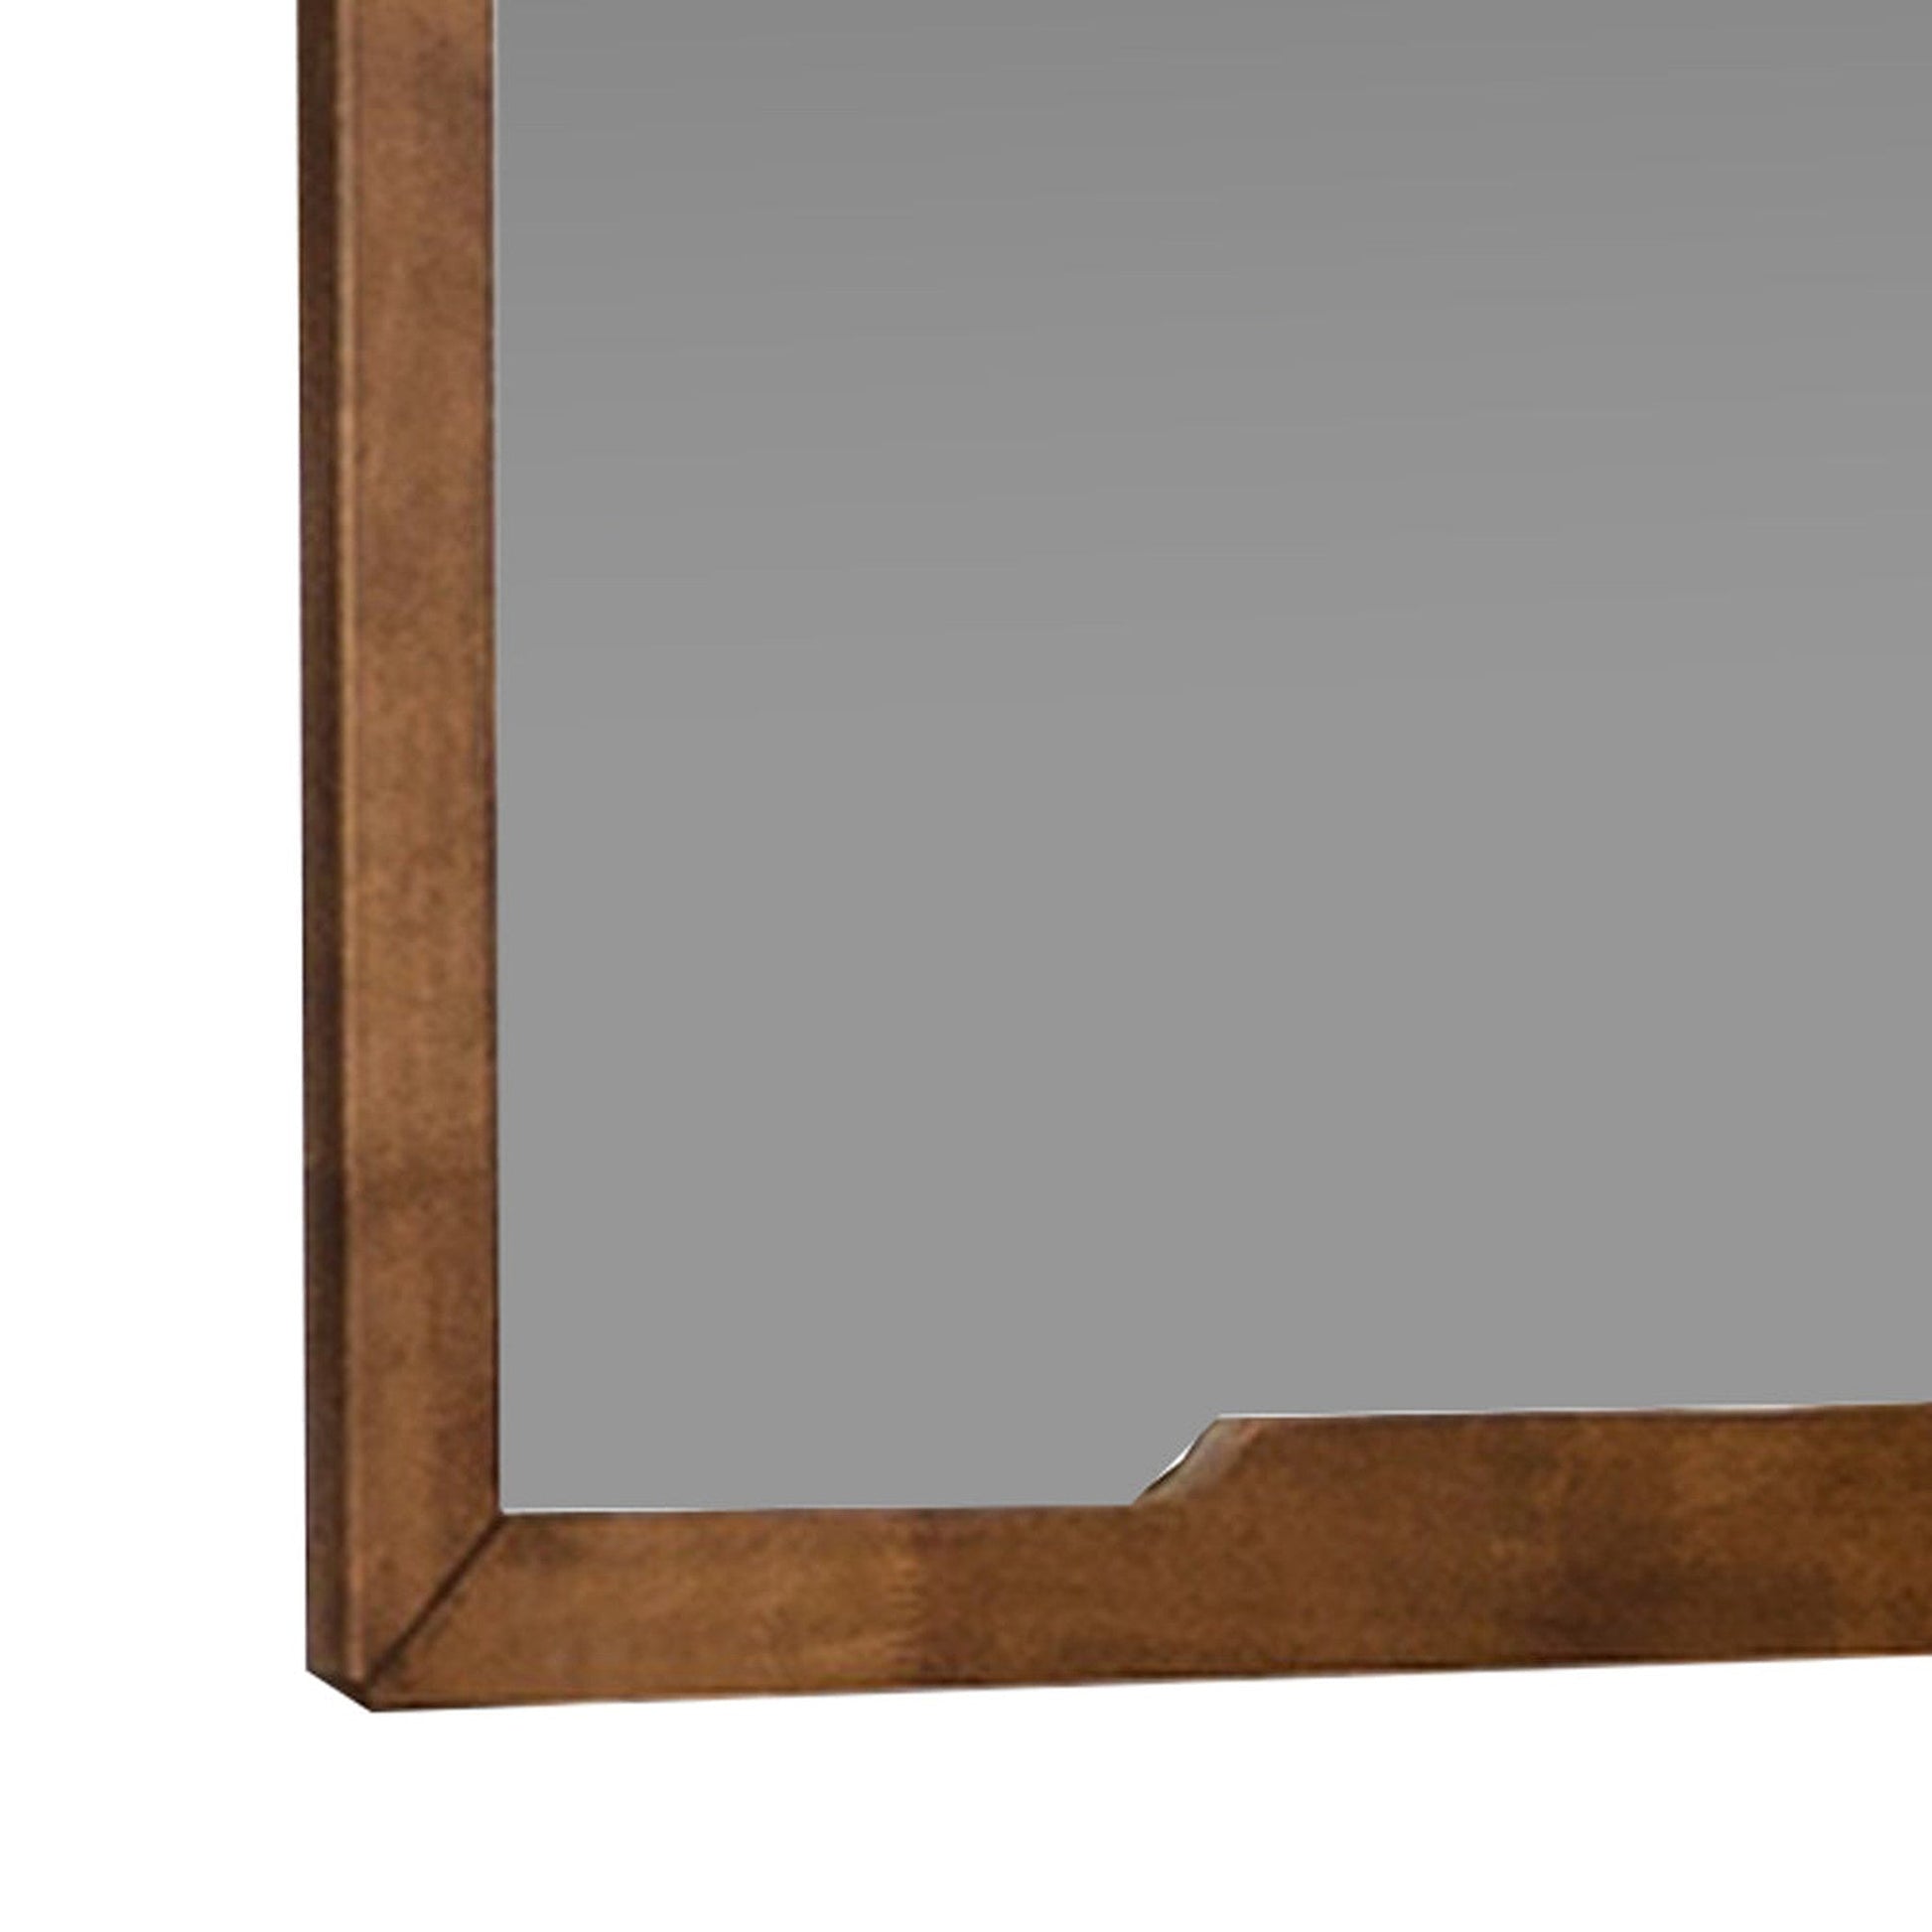 Benzara Walnut Brown Sleek Wooden Frame Wall Mirror With Mounting Hardware